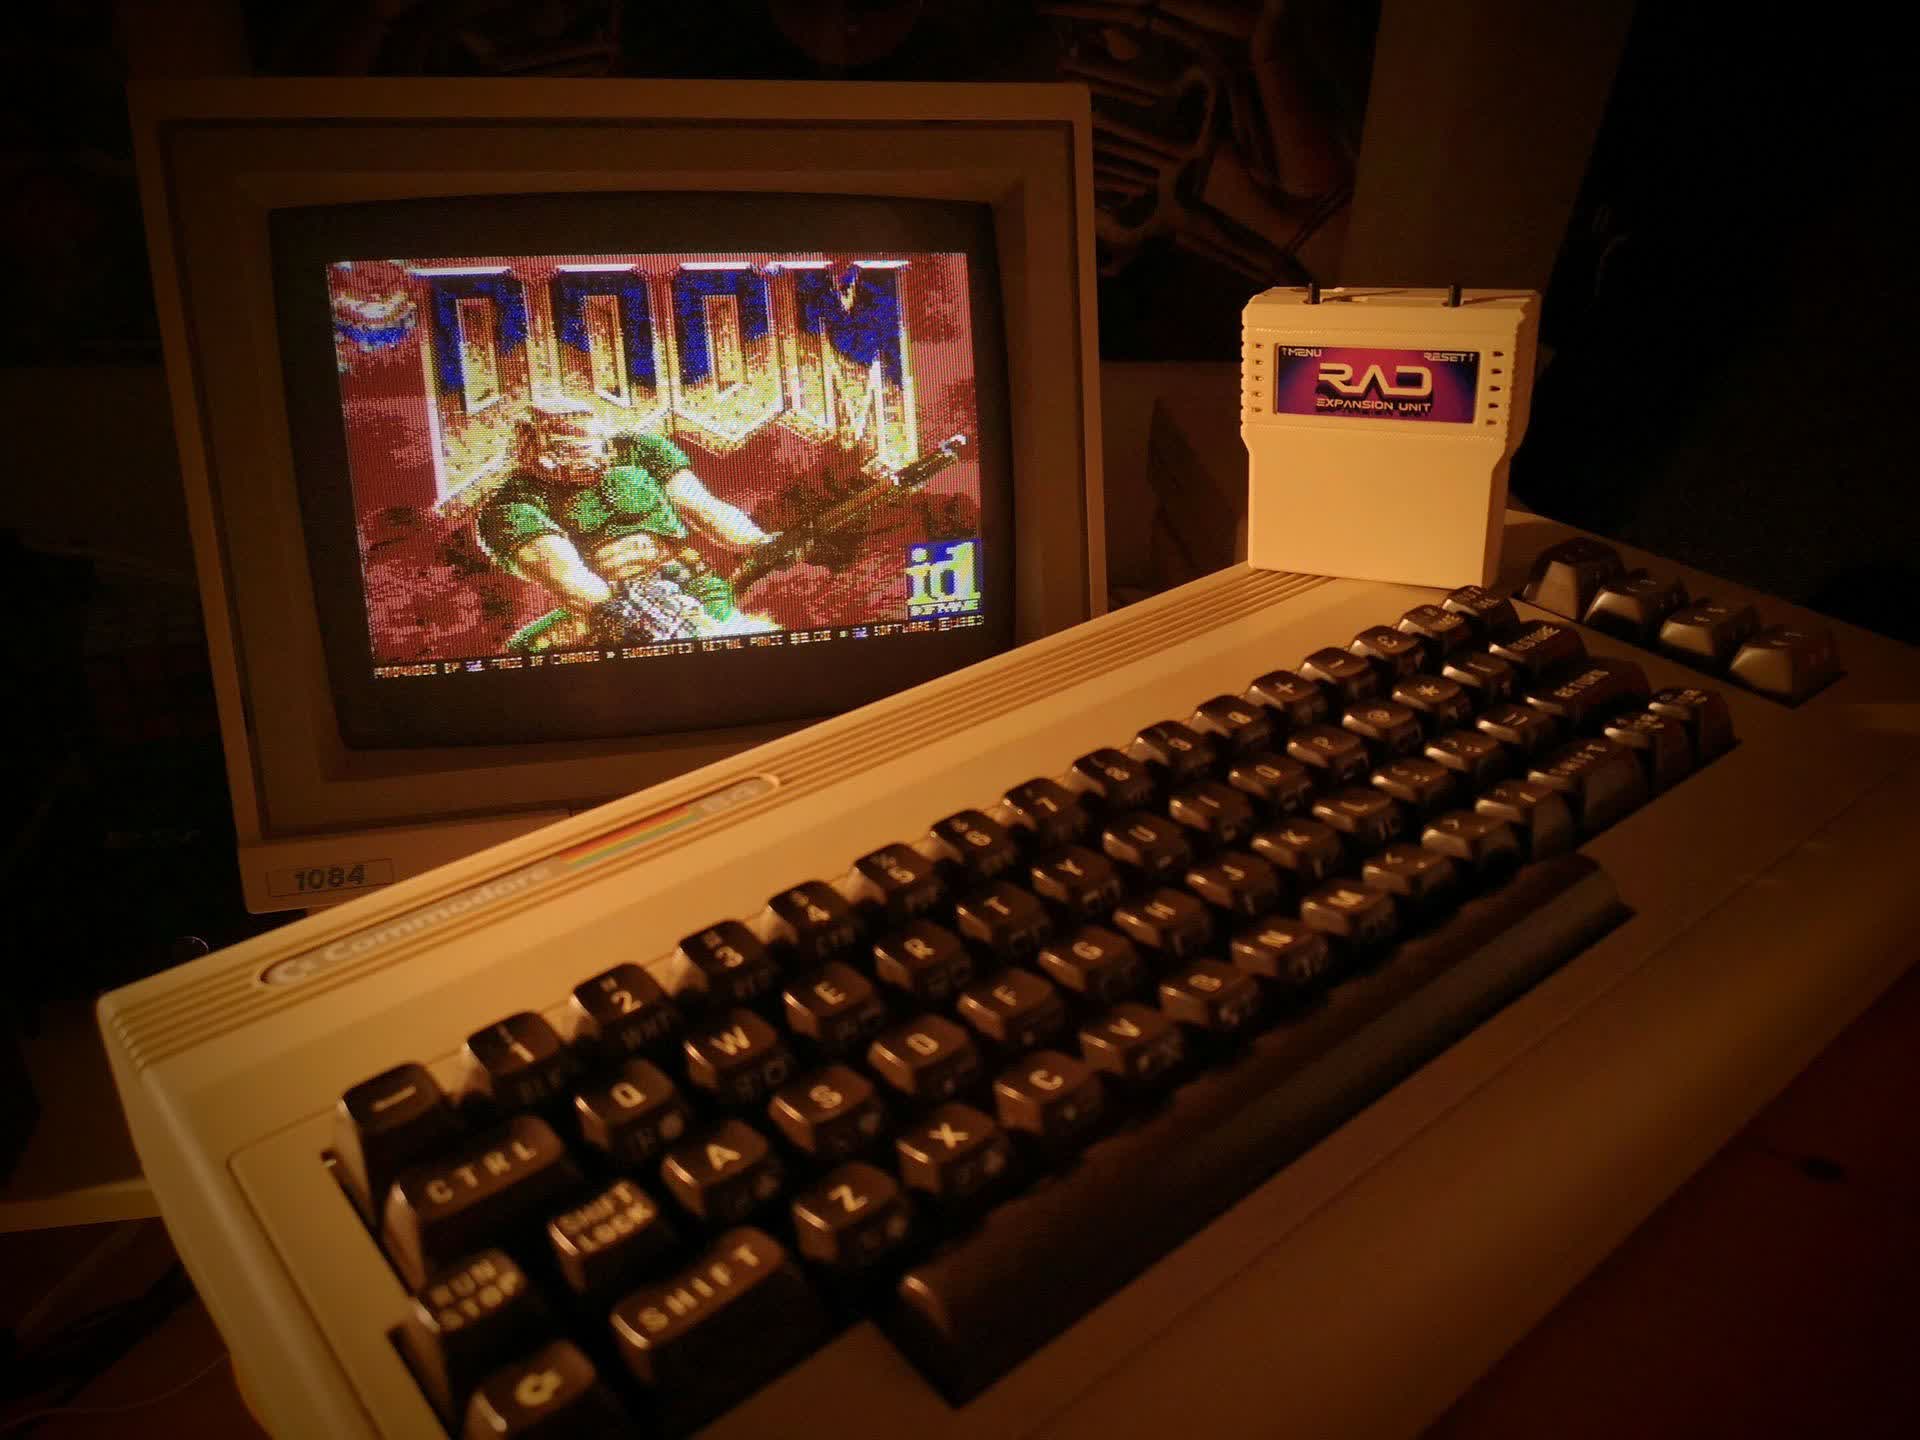 Commodore 64 piggybacks on Raspberry Pi to run Doom at 50fps